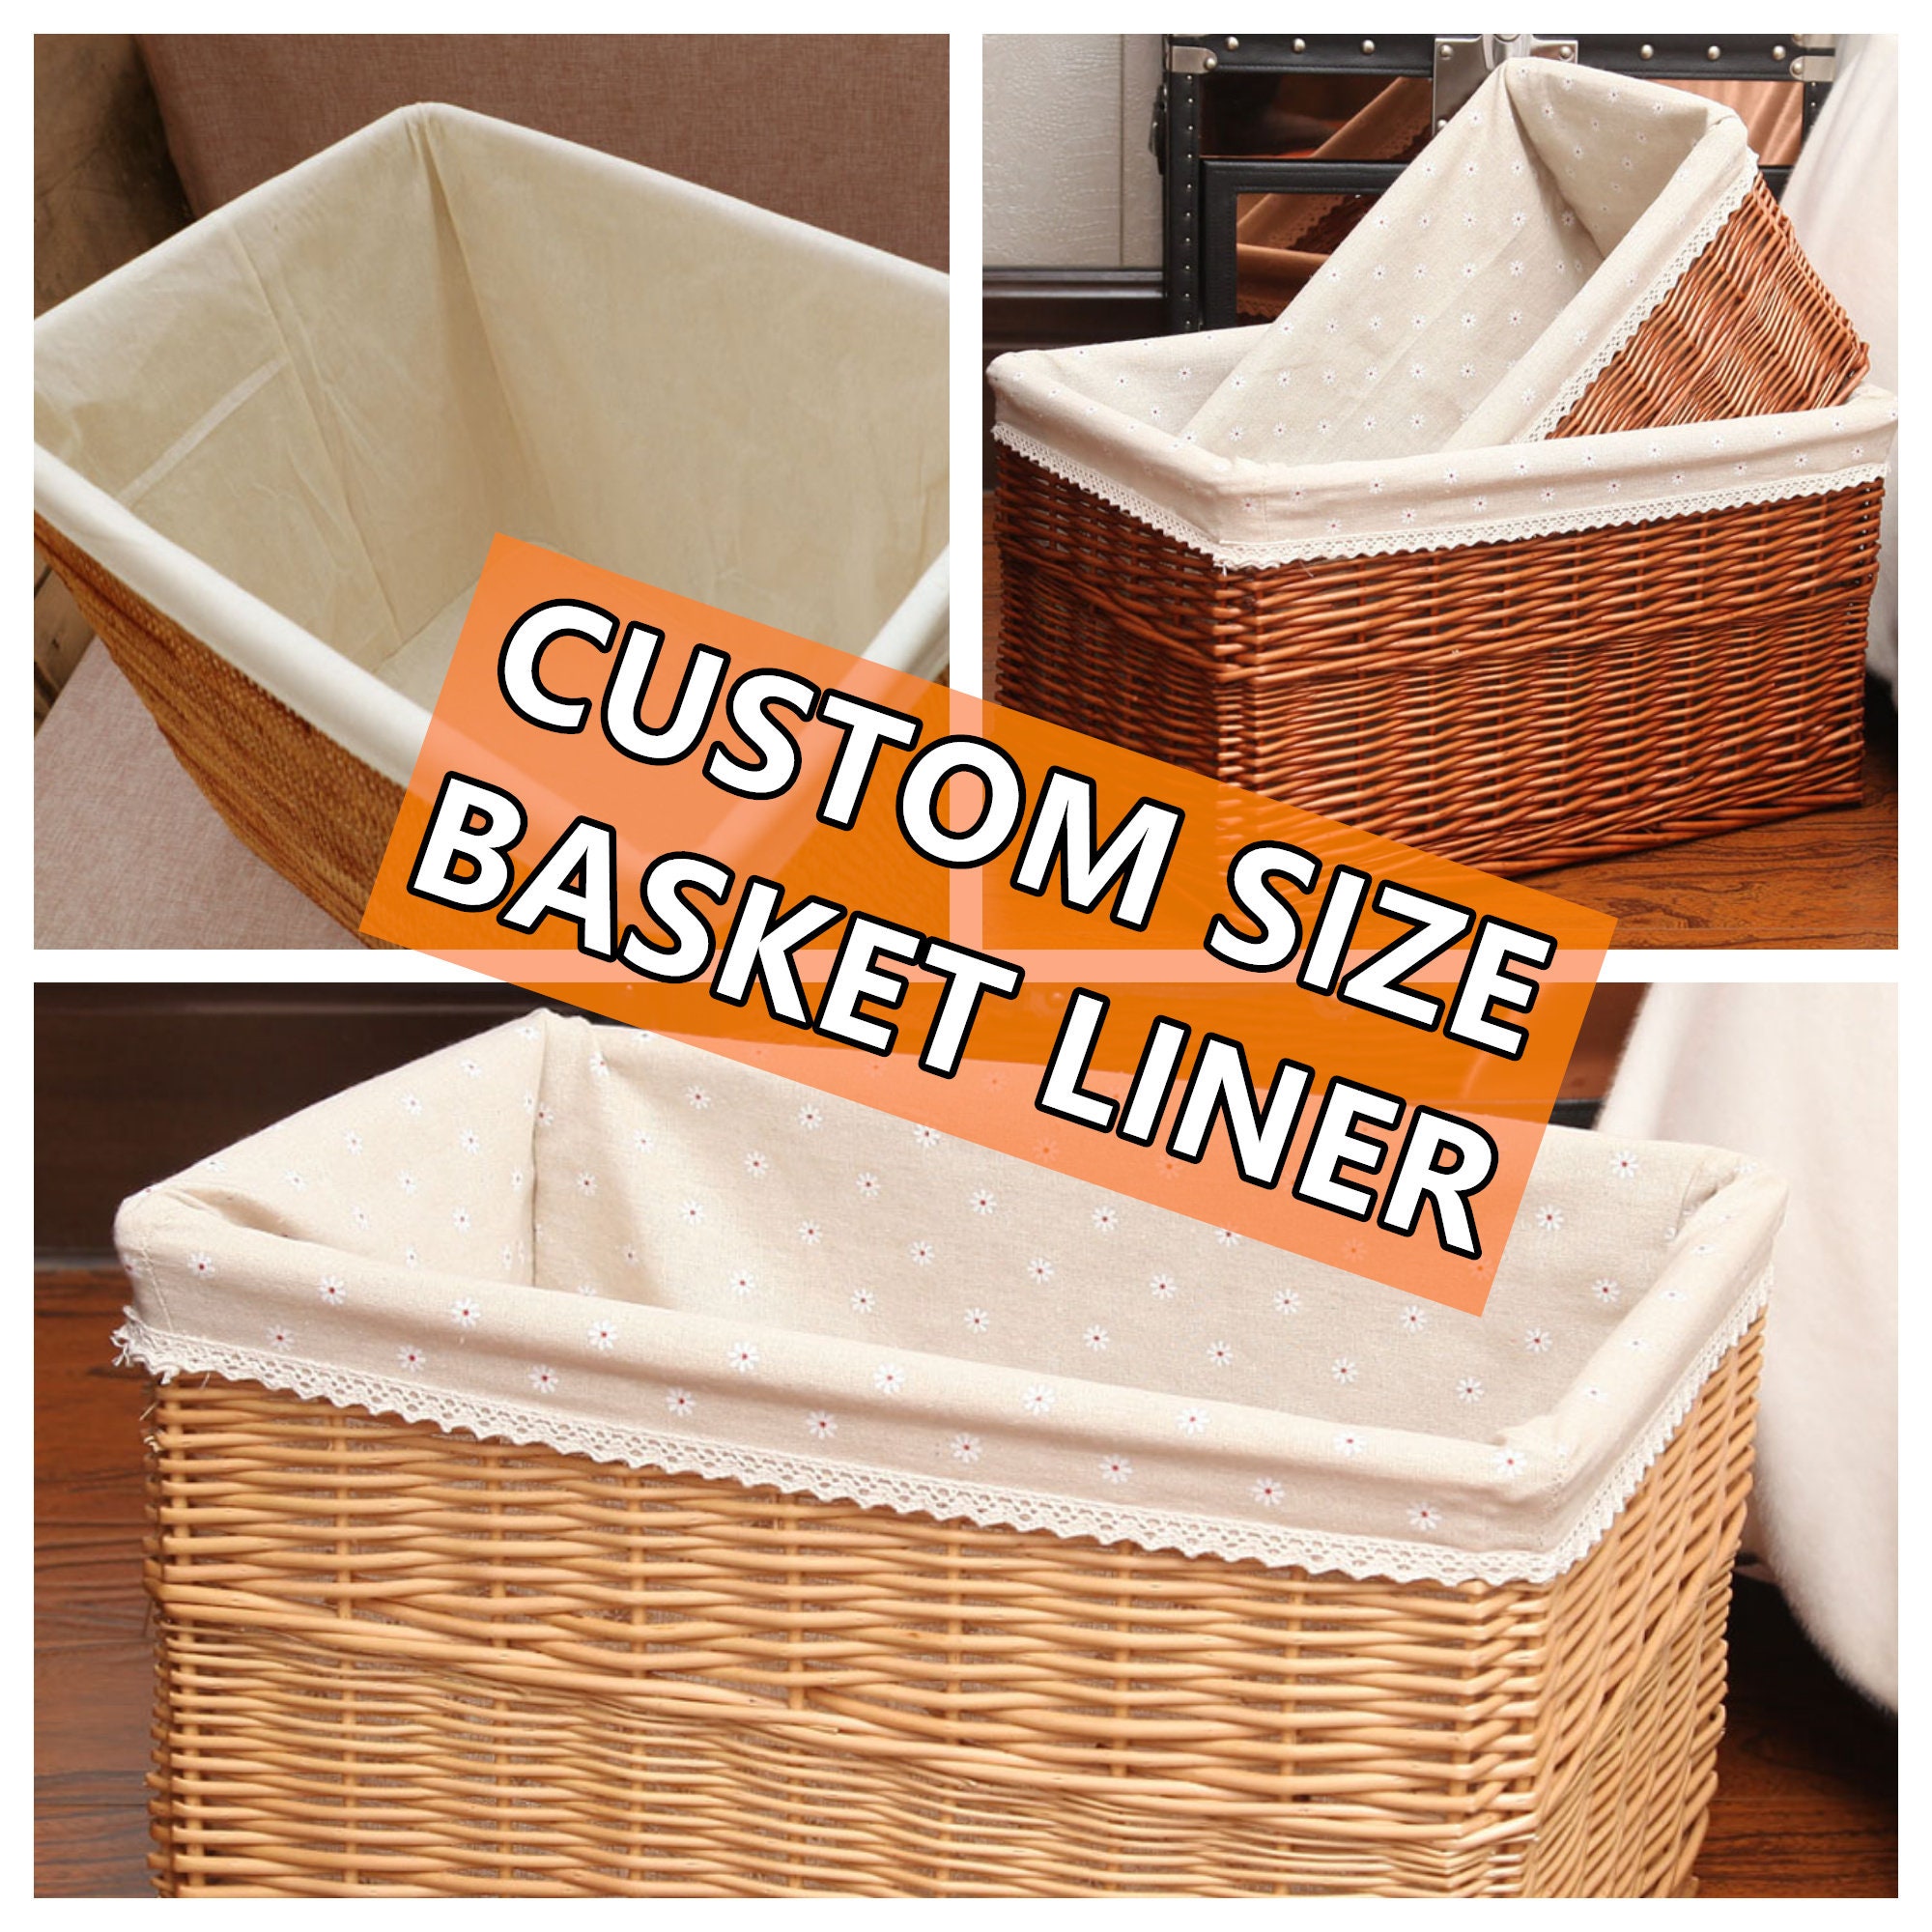 Make This: Laundry Basket Liner Tutorial